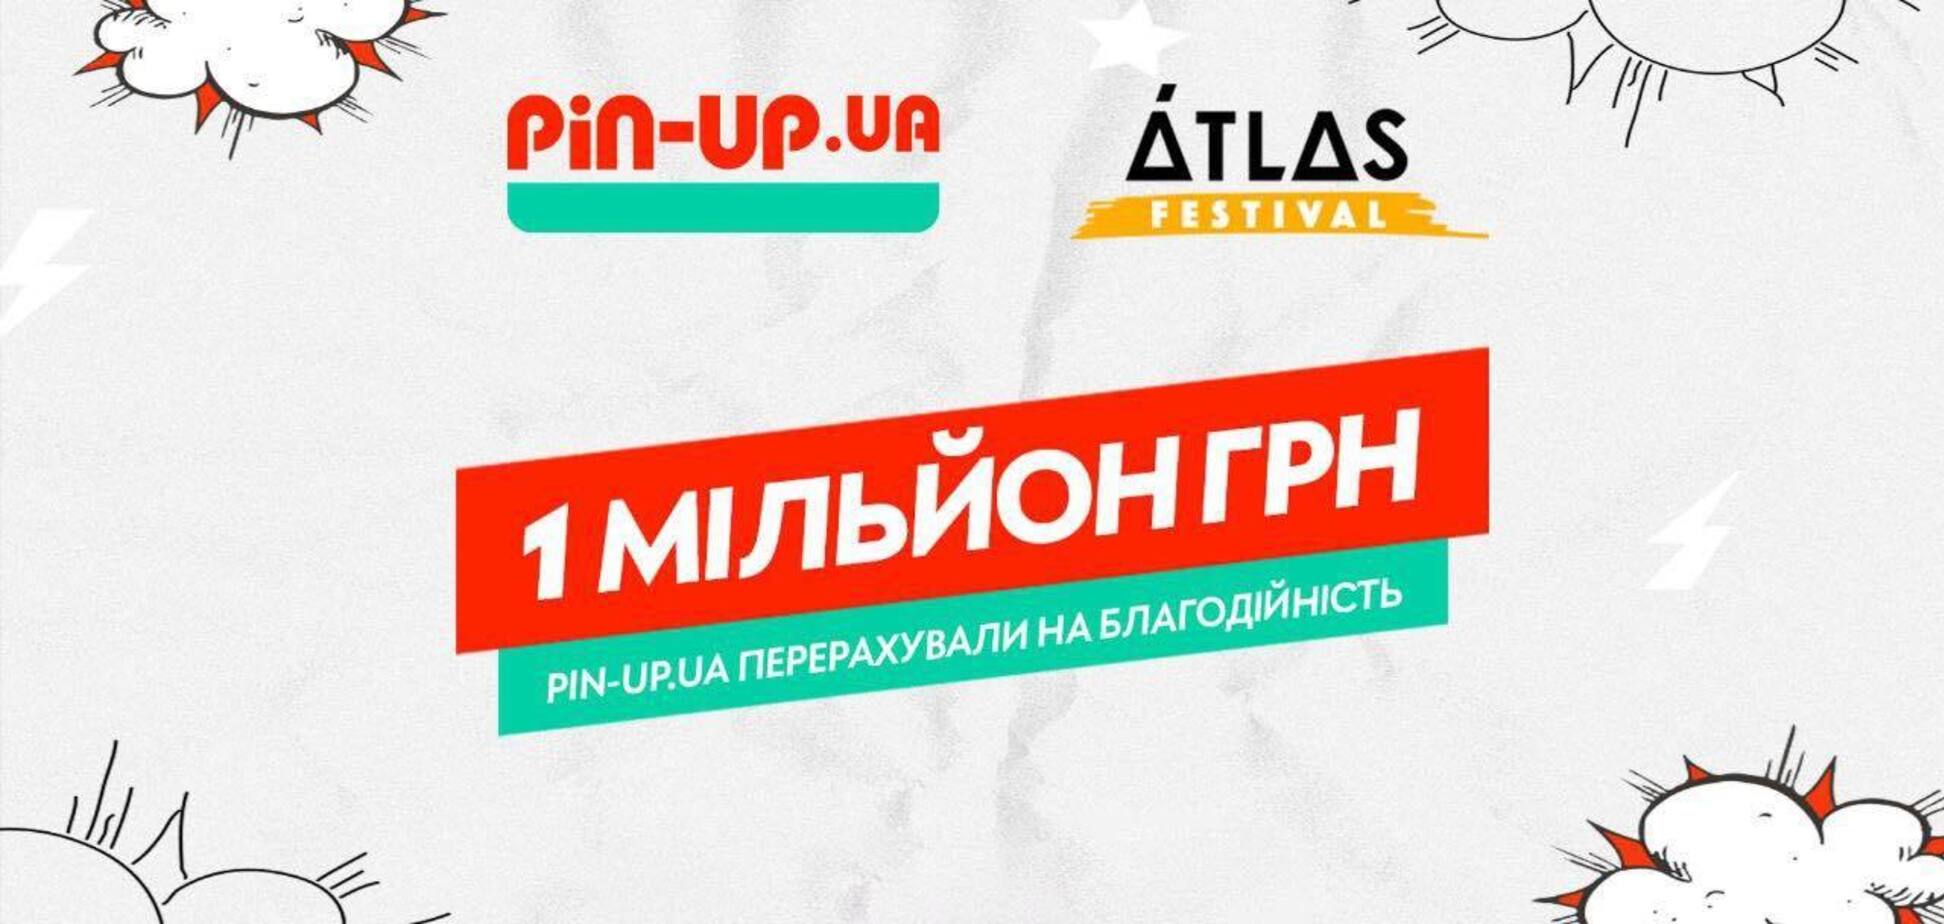 PIN-UP Ukraine перечислила 1 млн грн на благотворительную инициативу фестиваля Atlas